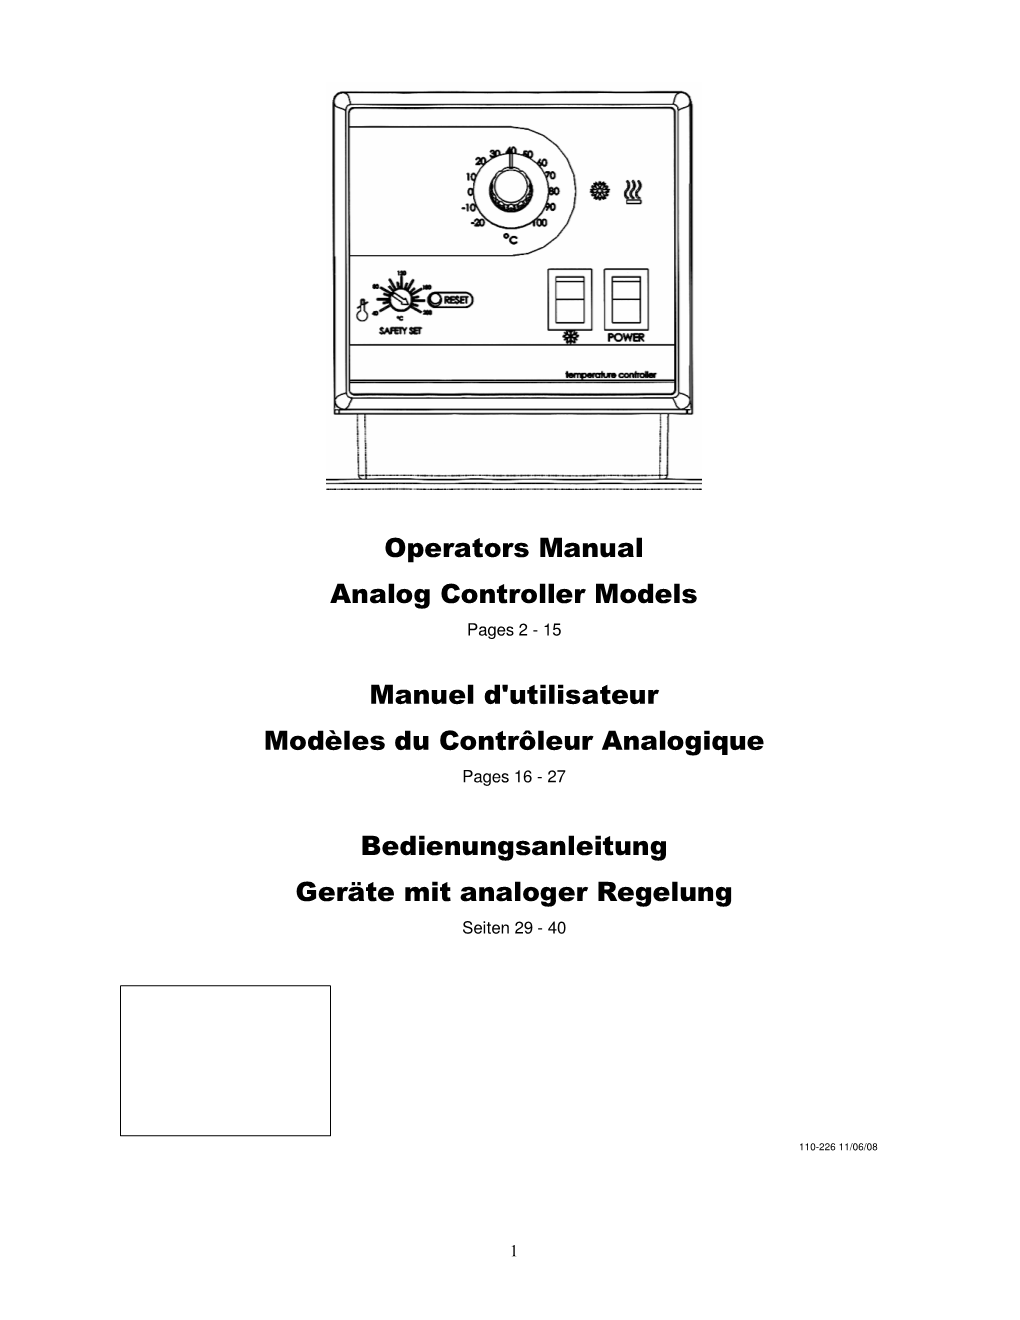 Operators Manual Analog Controller Models Manuel D'utilisateur